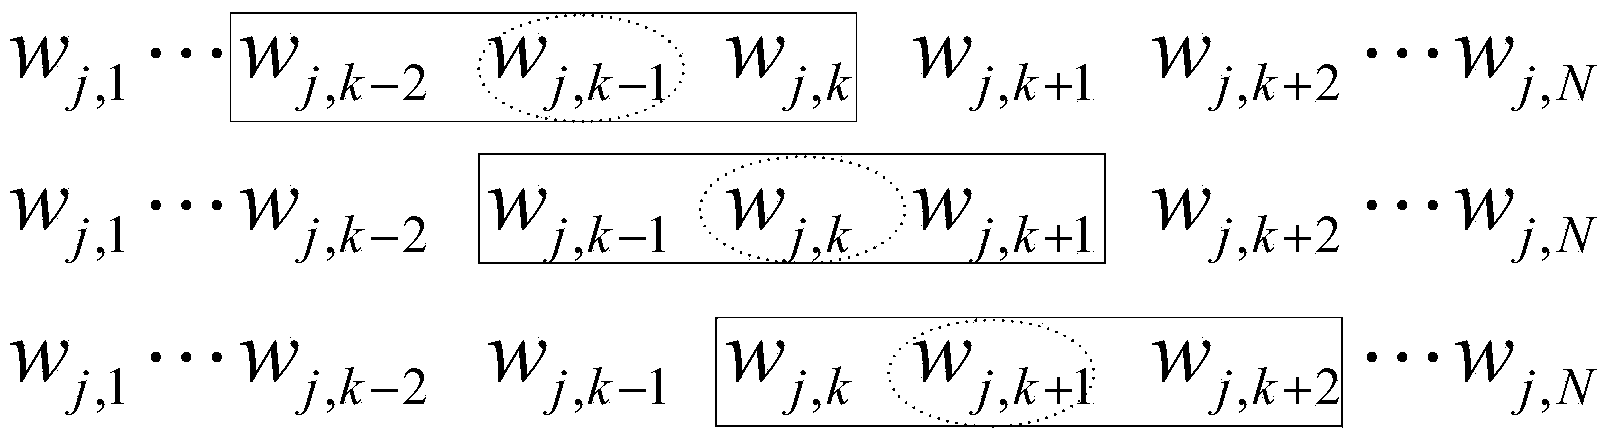 MZI signal denoising method based on neighborhood wavelet coefficients